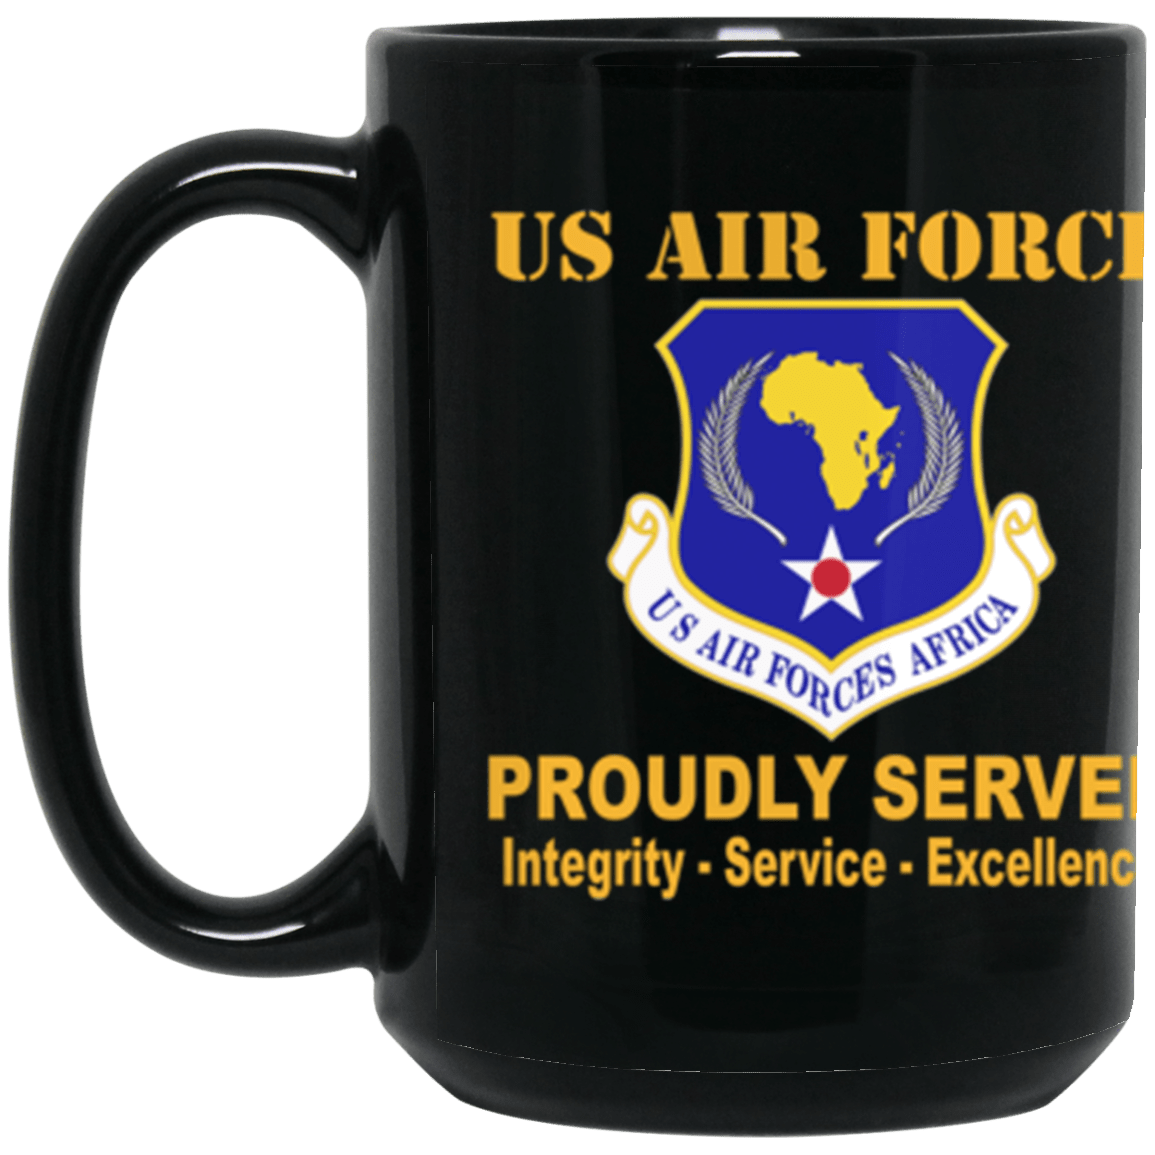 US Air Force Space Command Proudly Served Core Values 15 oz. Black Mug-Mug-USAF-Veterans Nation